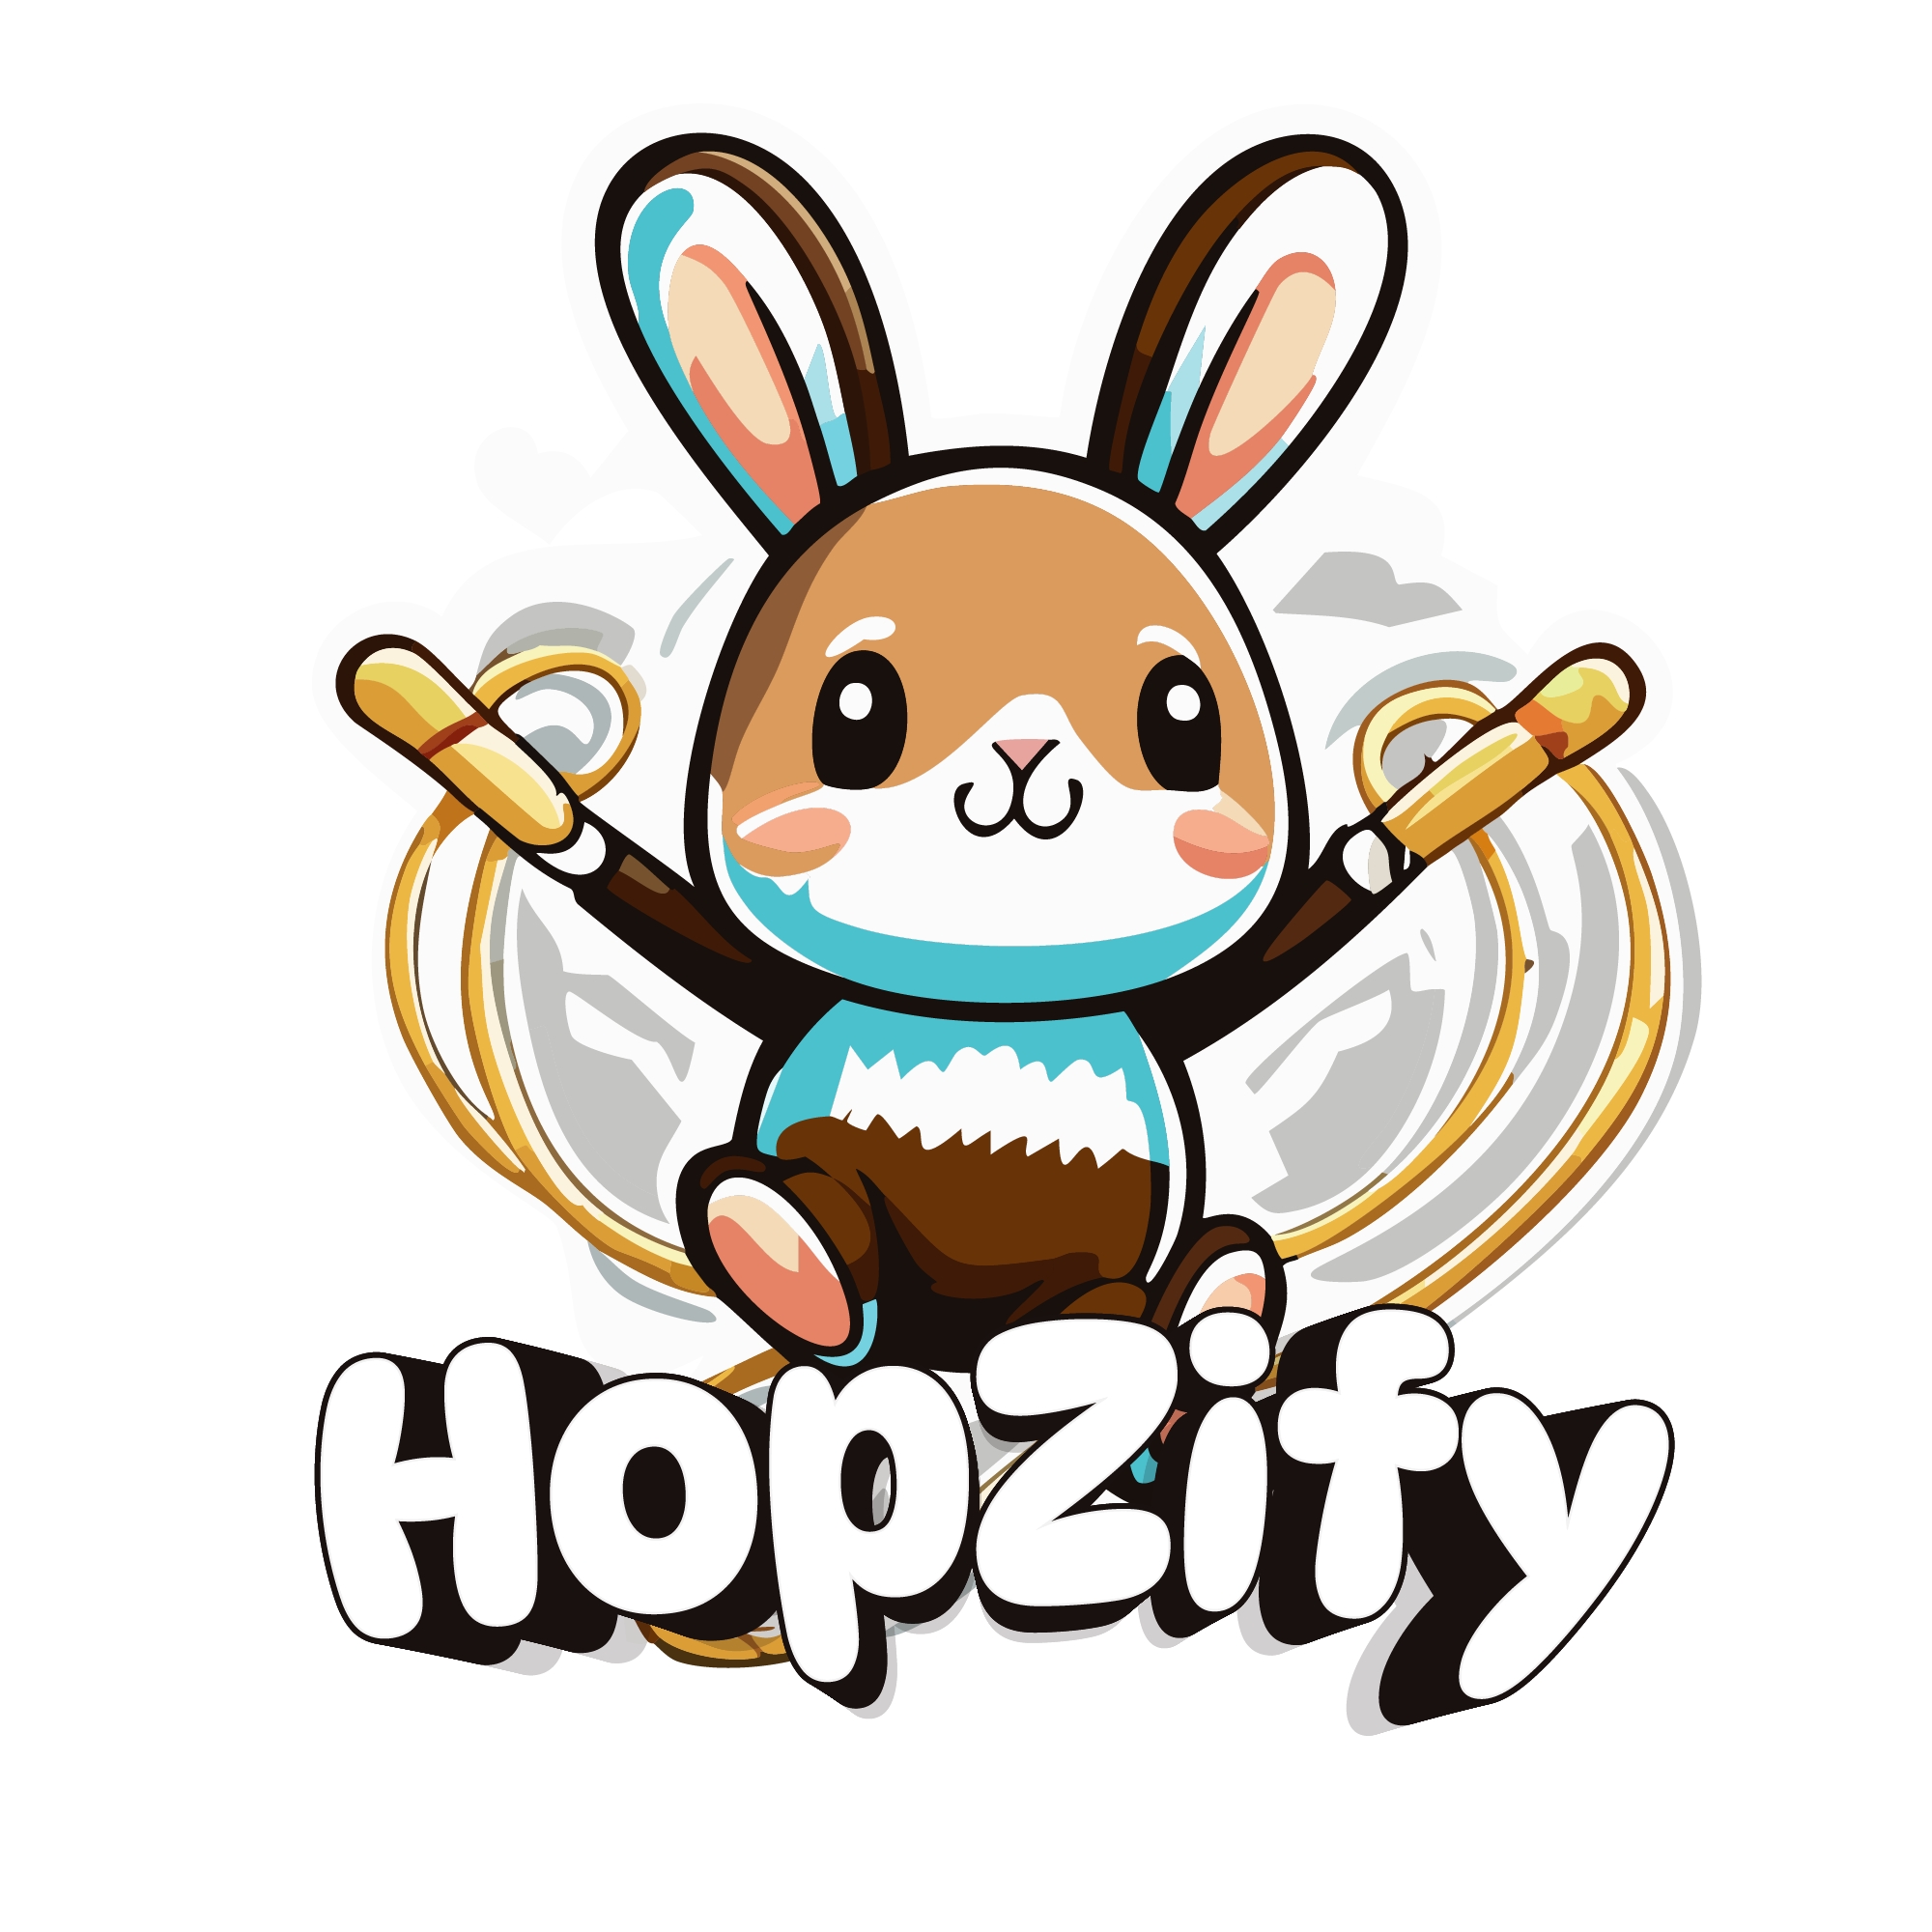 Hopzify